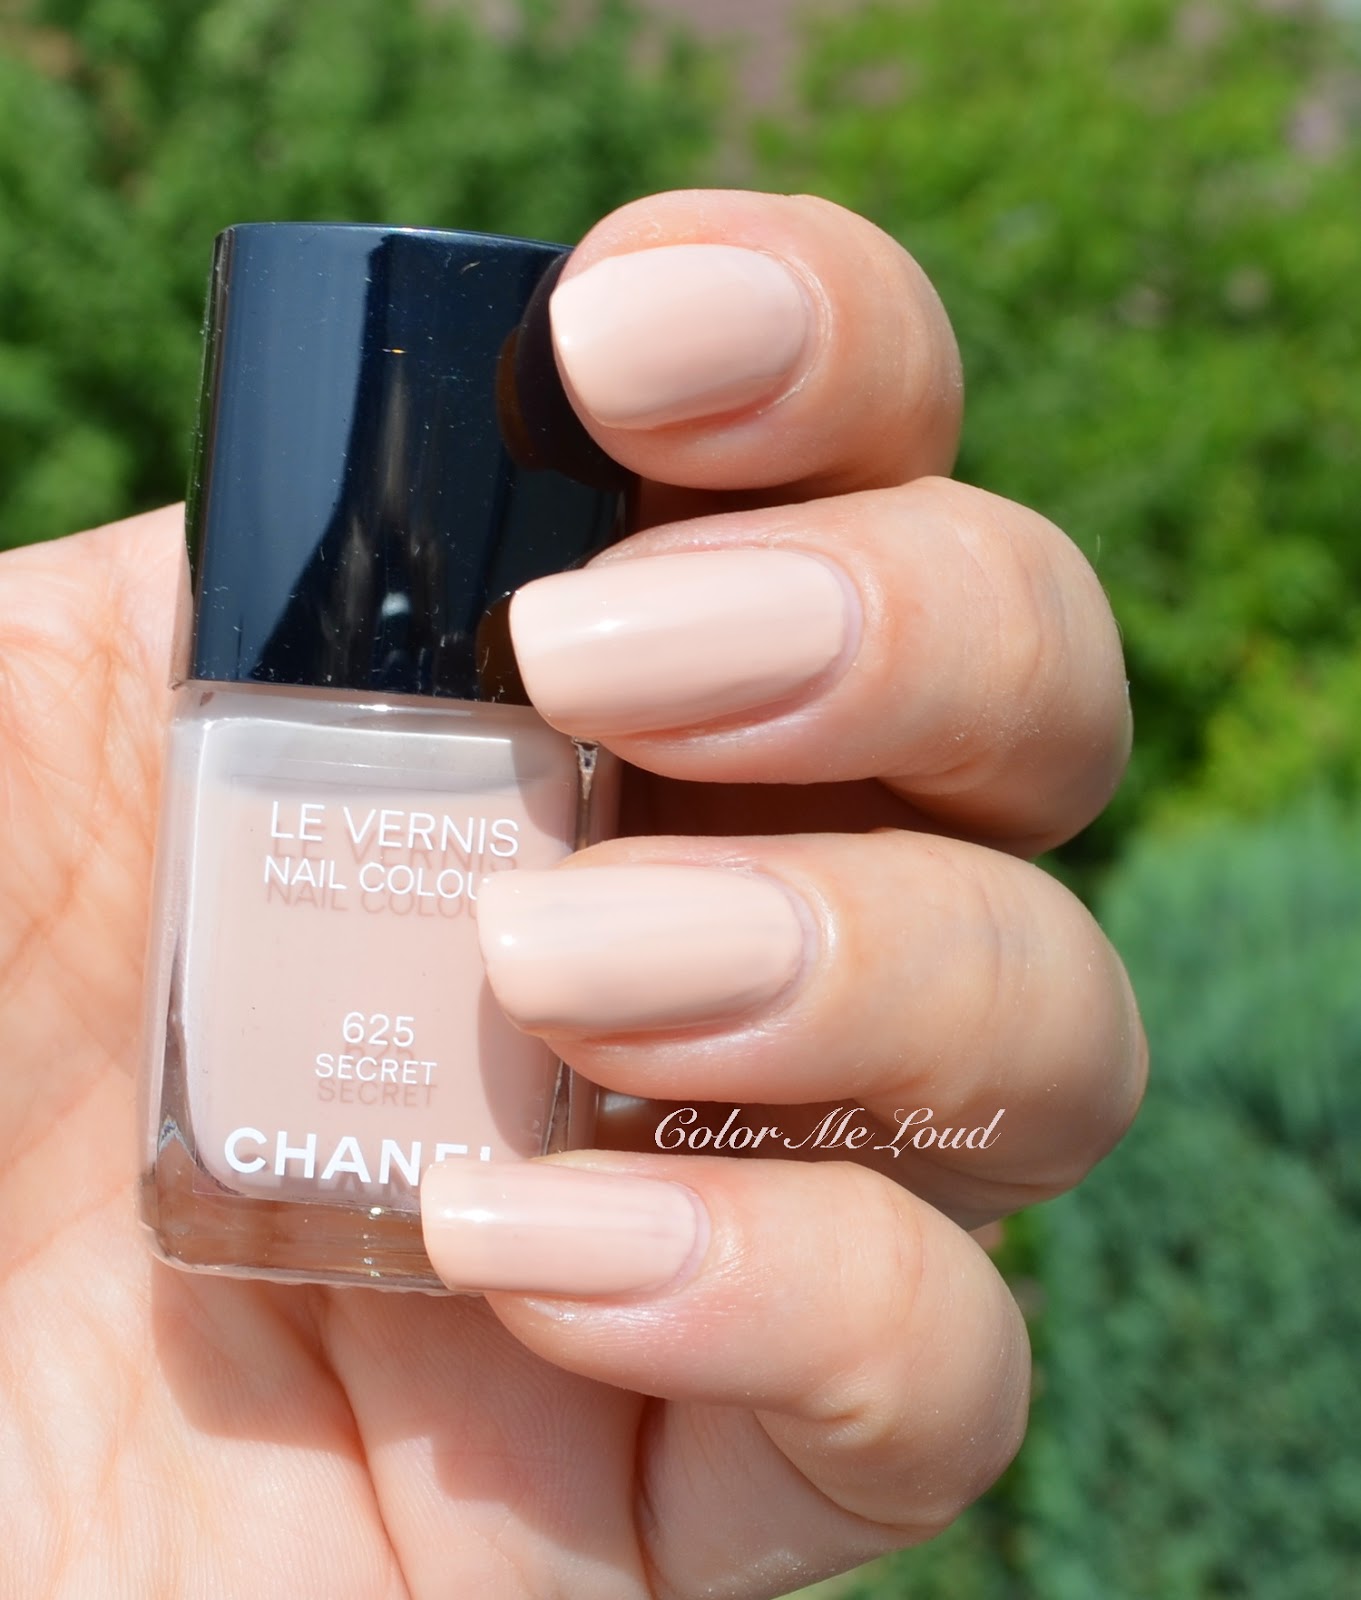  Chanel Le Vernis Nail Polish Long-Lasting Color 540